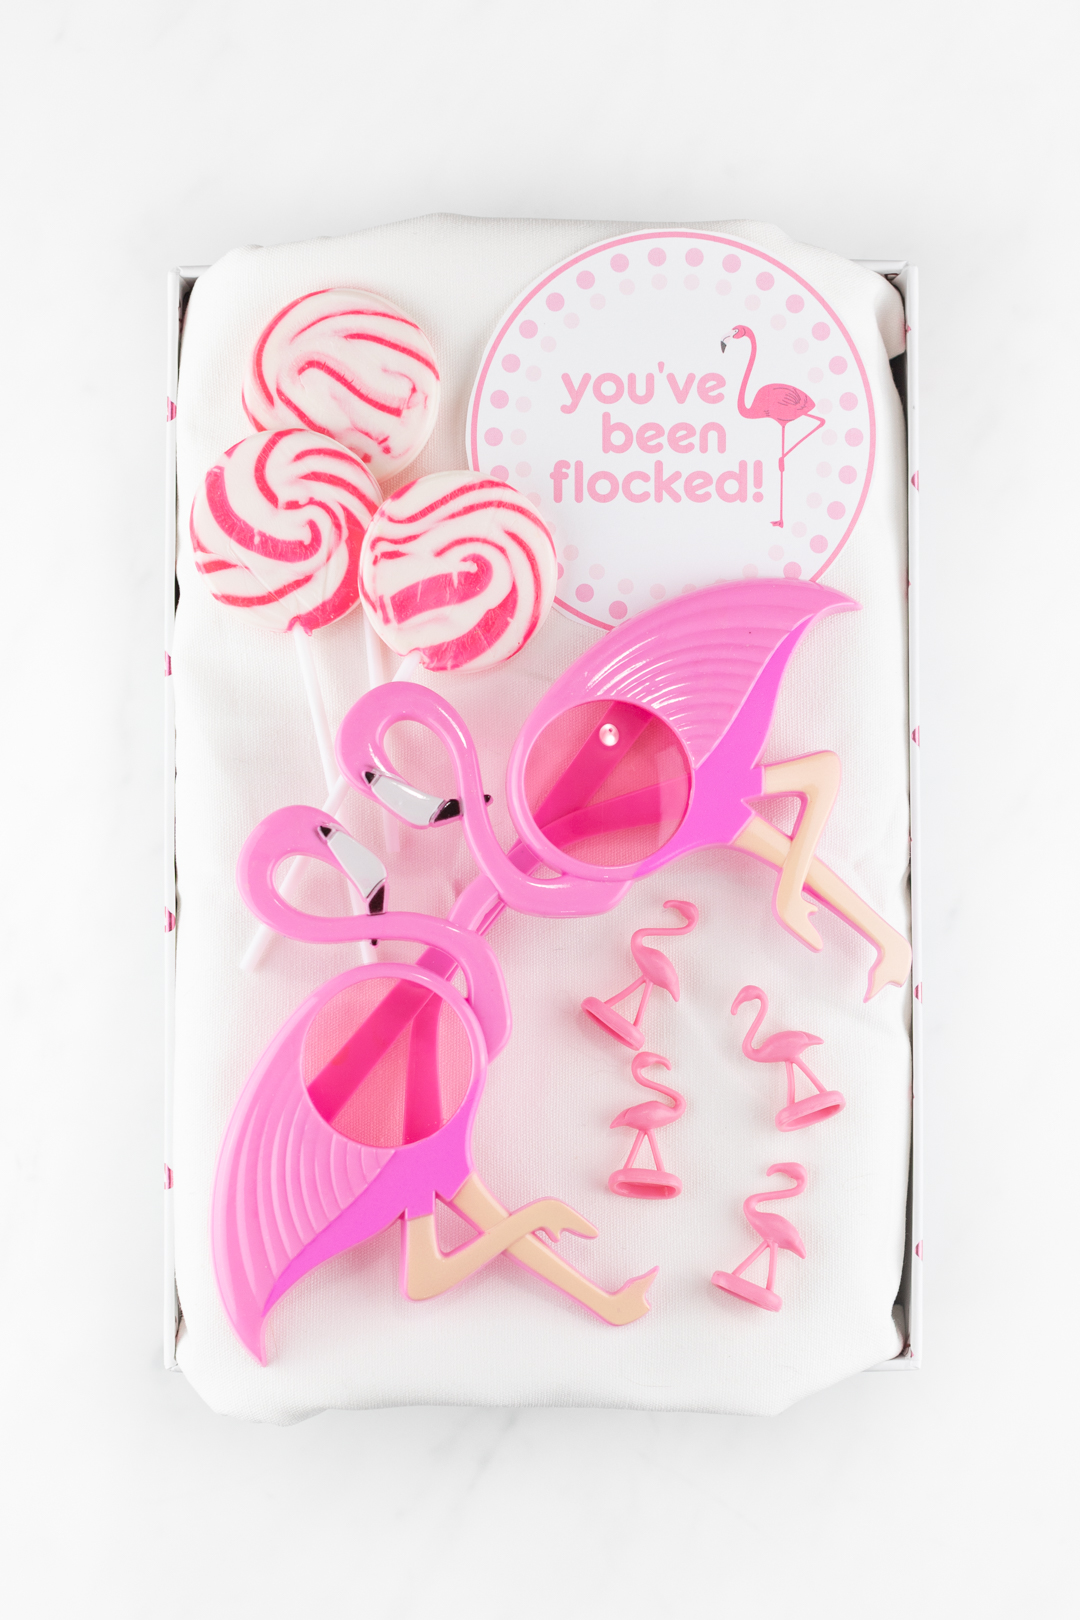 you've been flocked gift box with flamingo glasses, lollipops, mini flamingo figurines